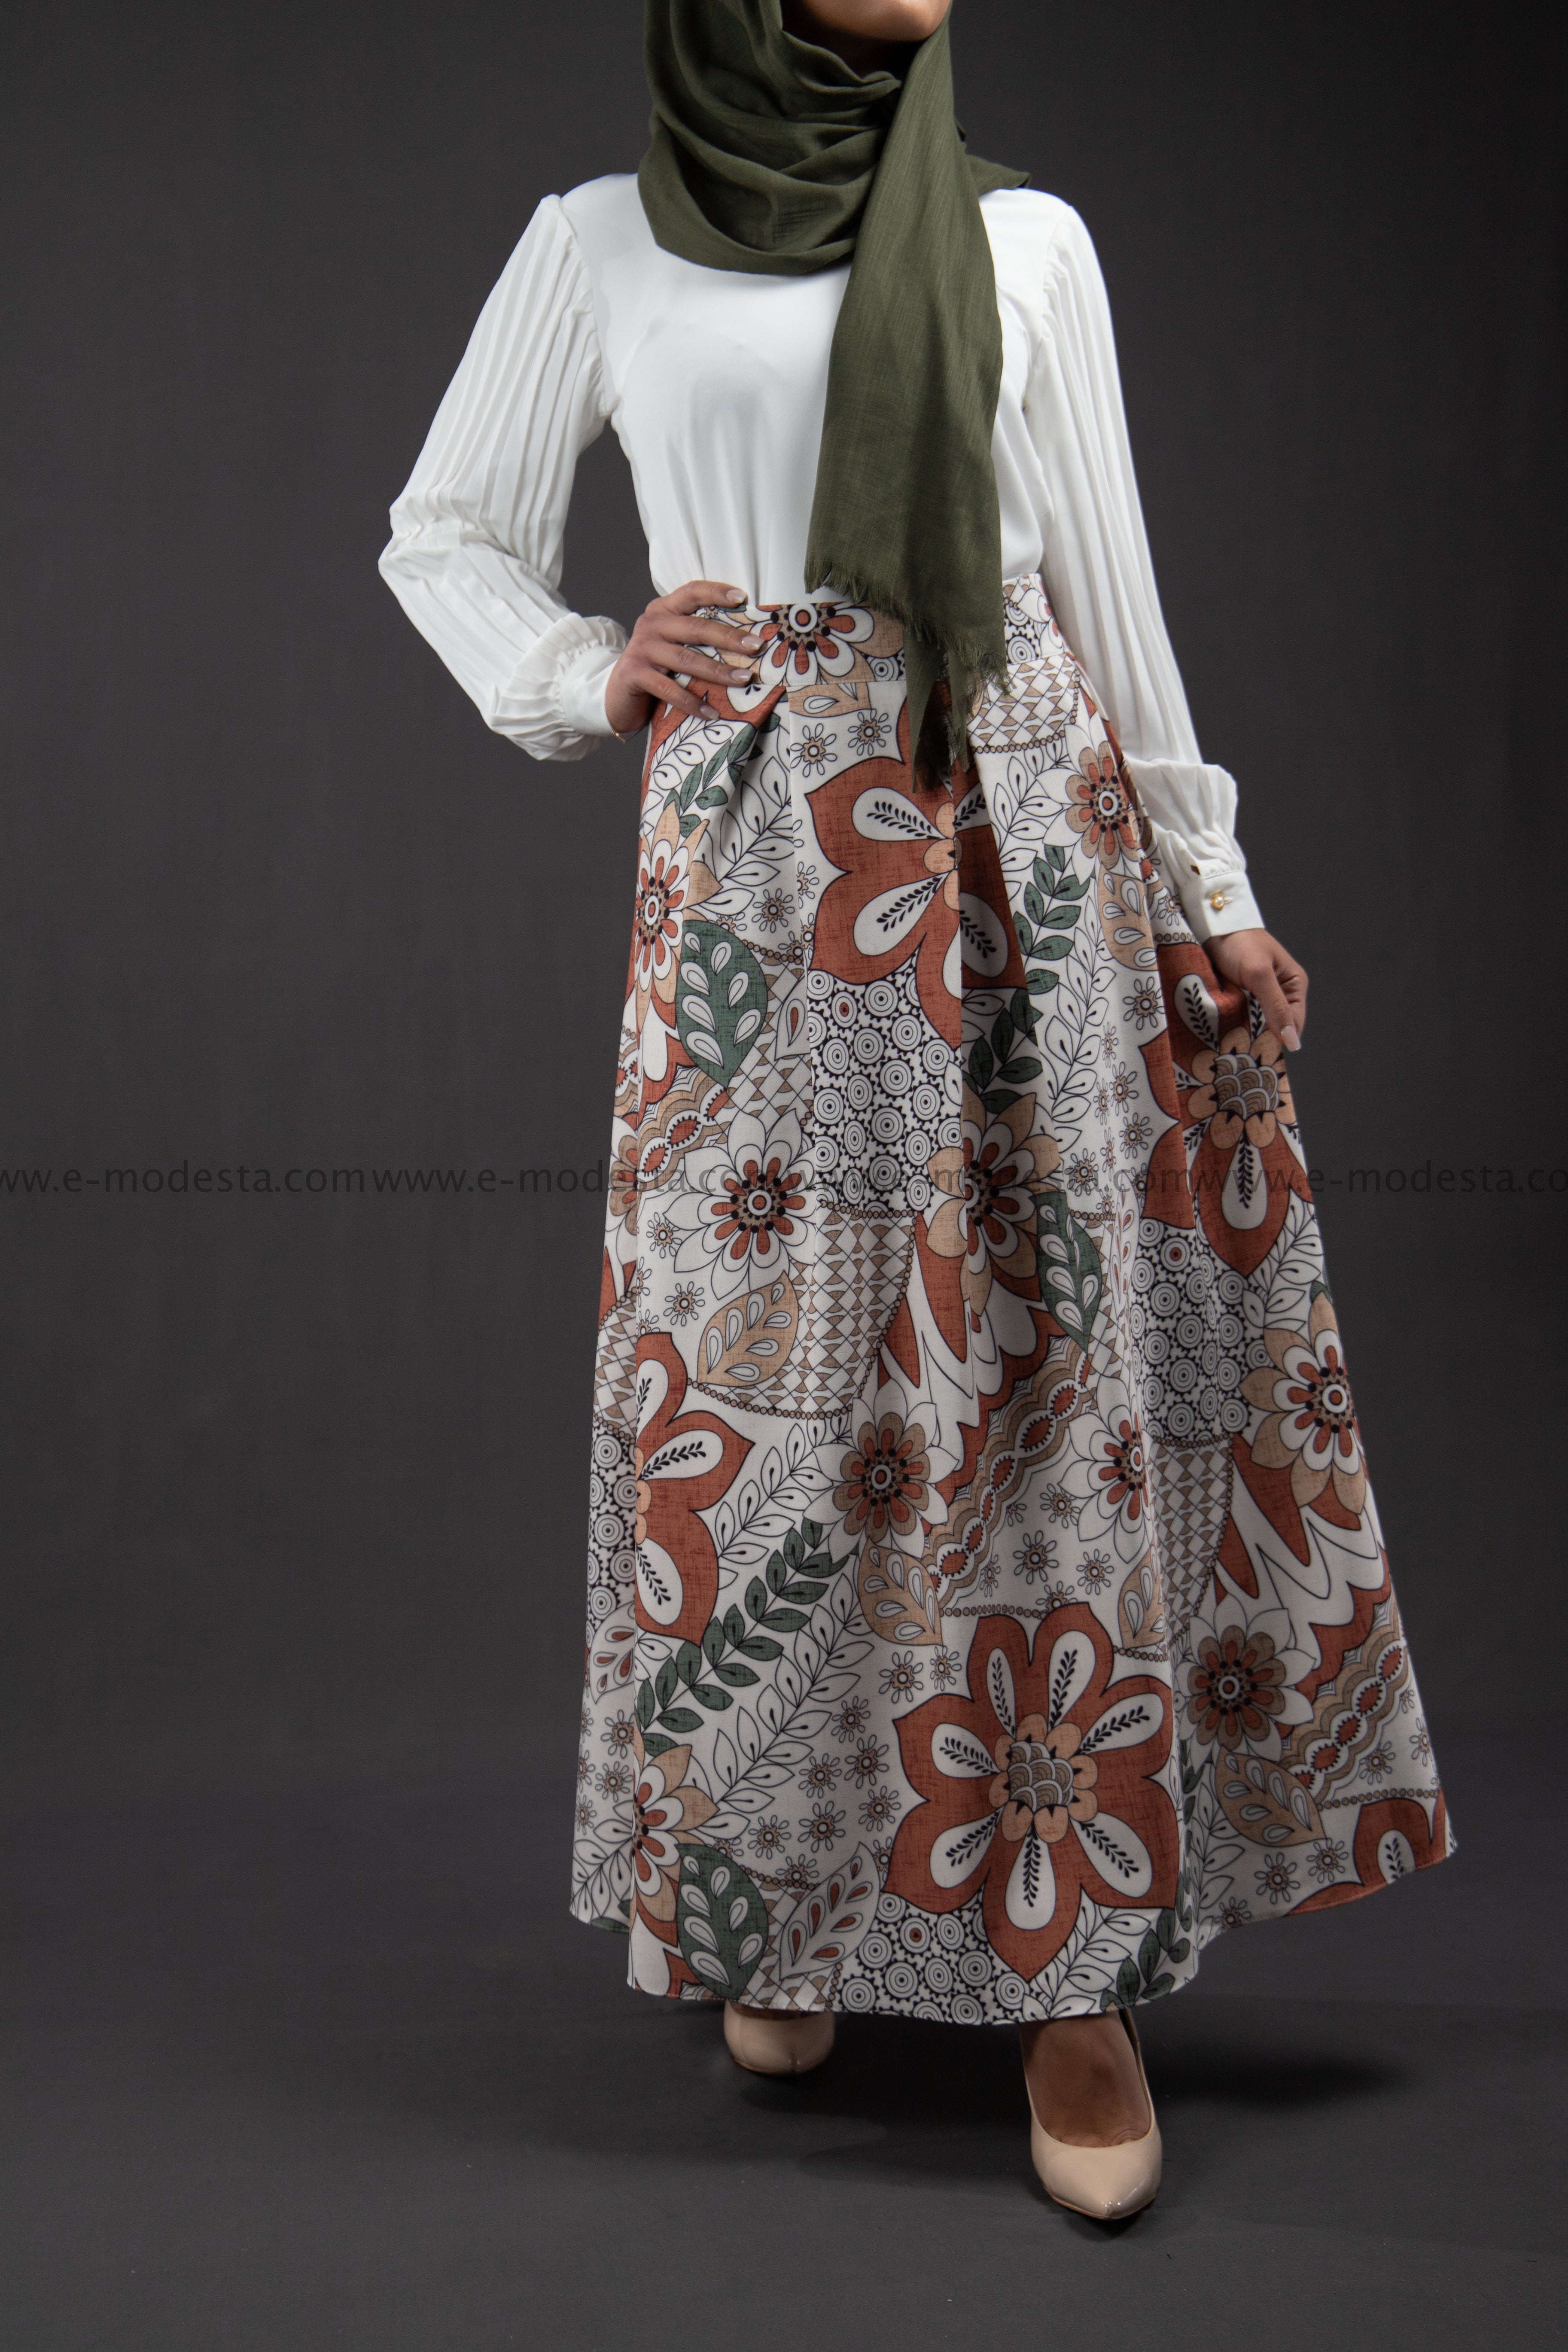 Maxi Floral Skirt | Green & Orange | Lined from Inside - E-Modesta